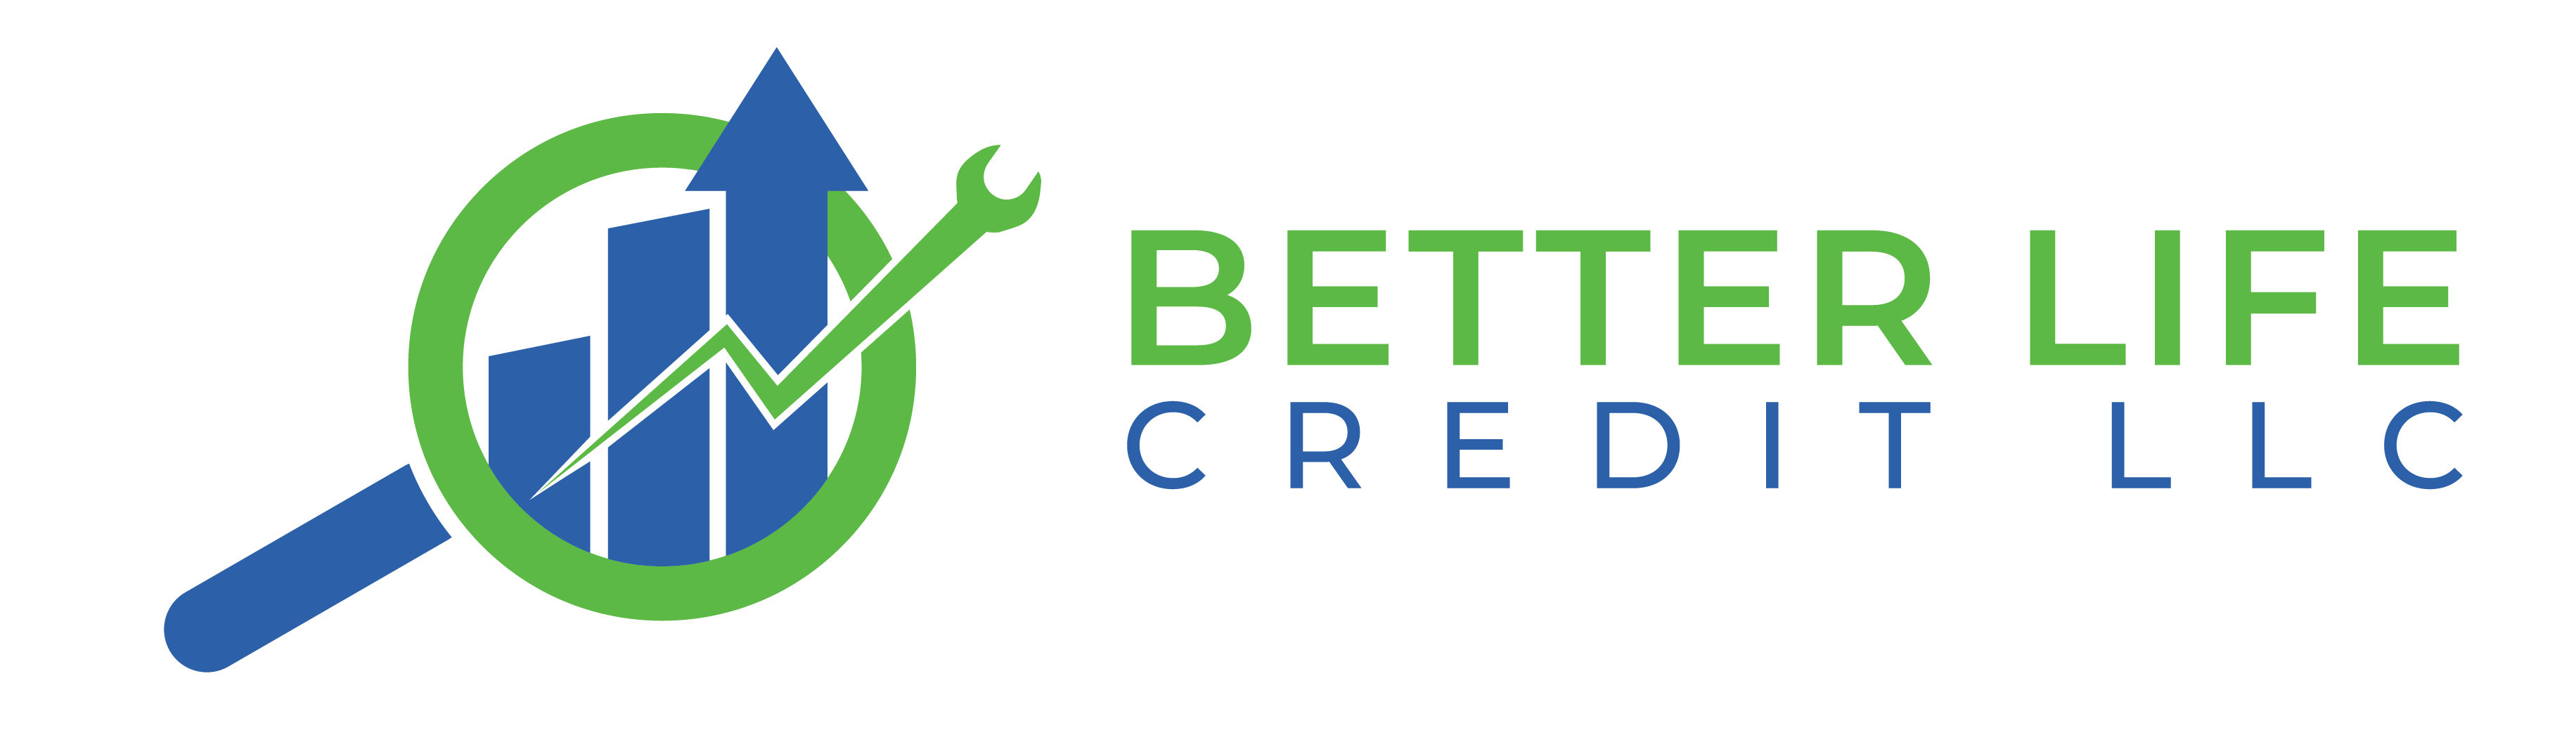 Better Life Credit